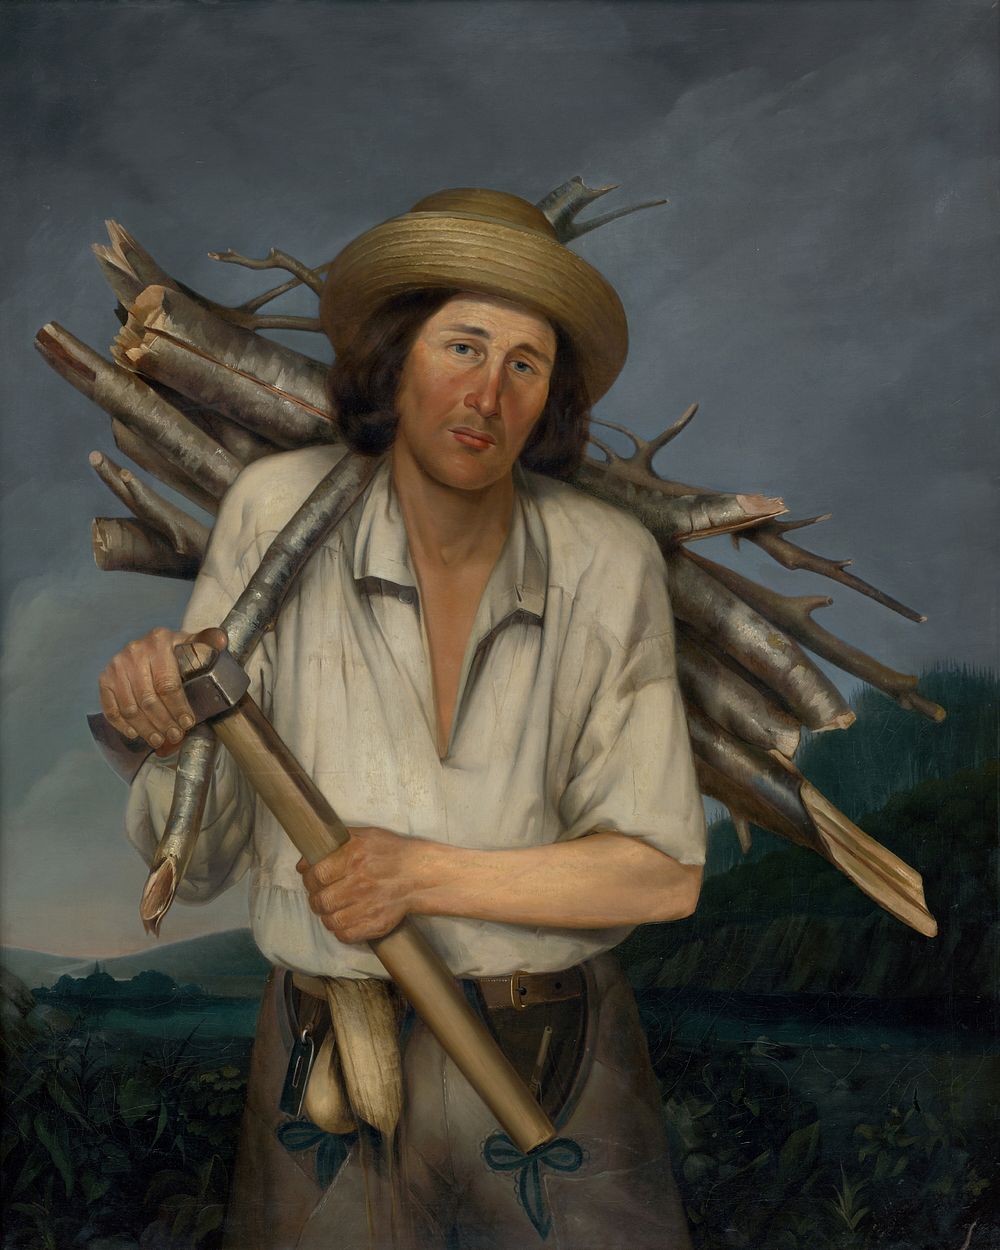 Man carrying wood, Anton Stadler